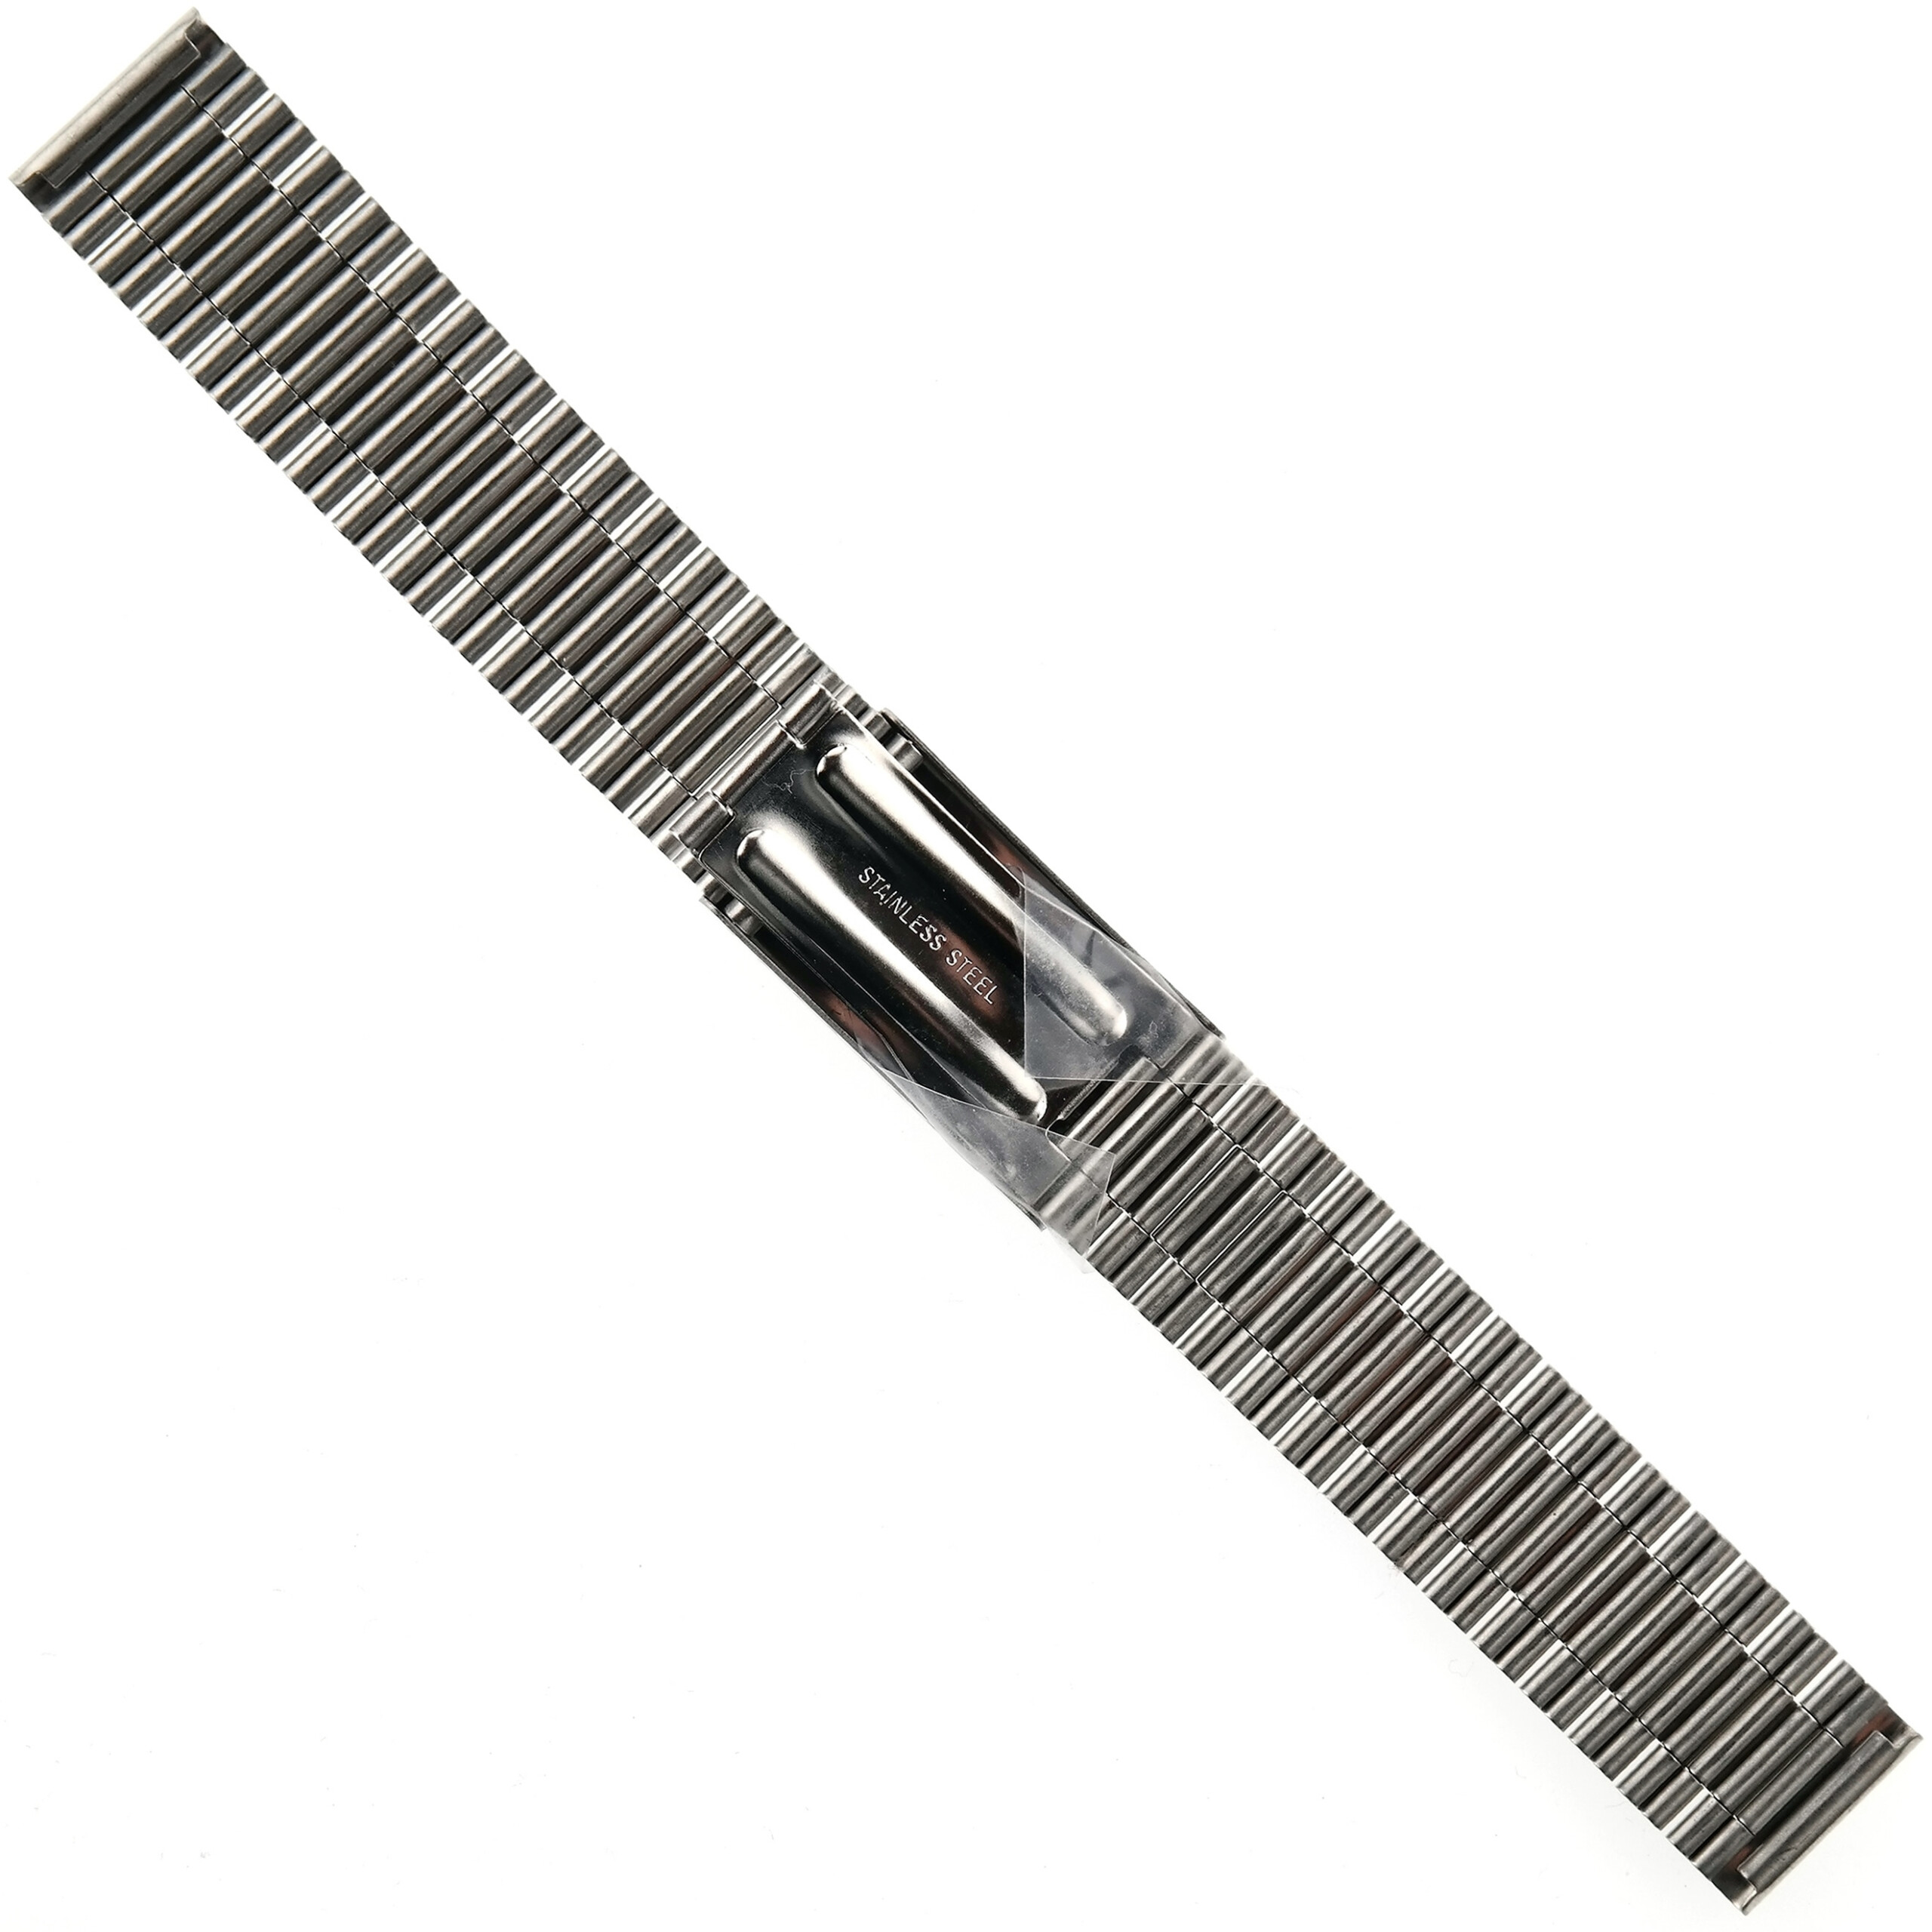 Authentic ORIS - Stainless Steel Watch Bracelet - Vintage - 18 mm